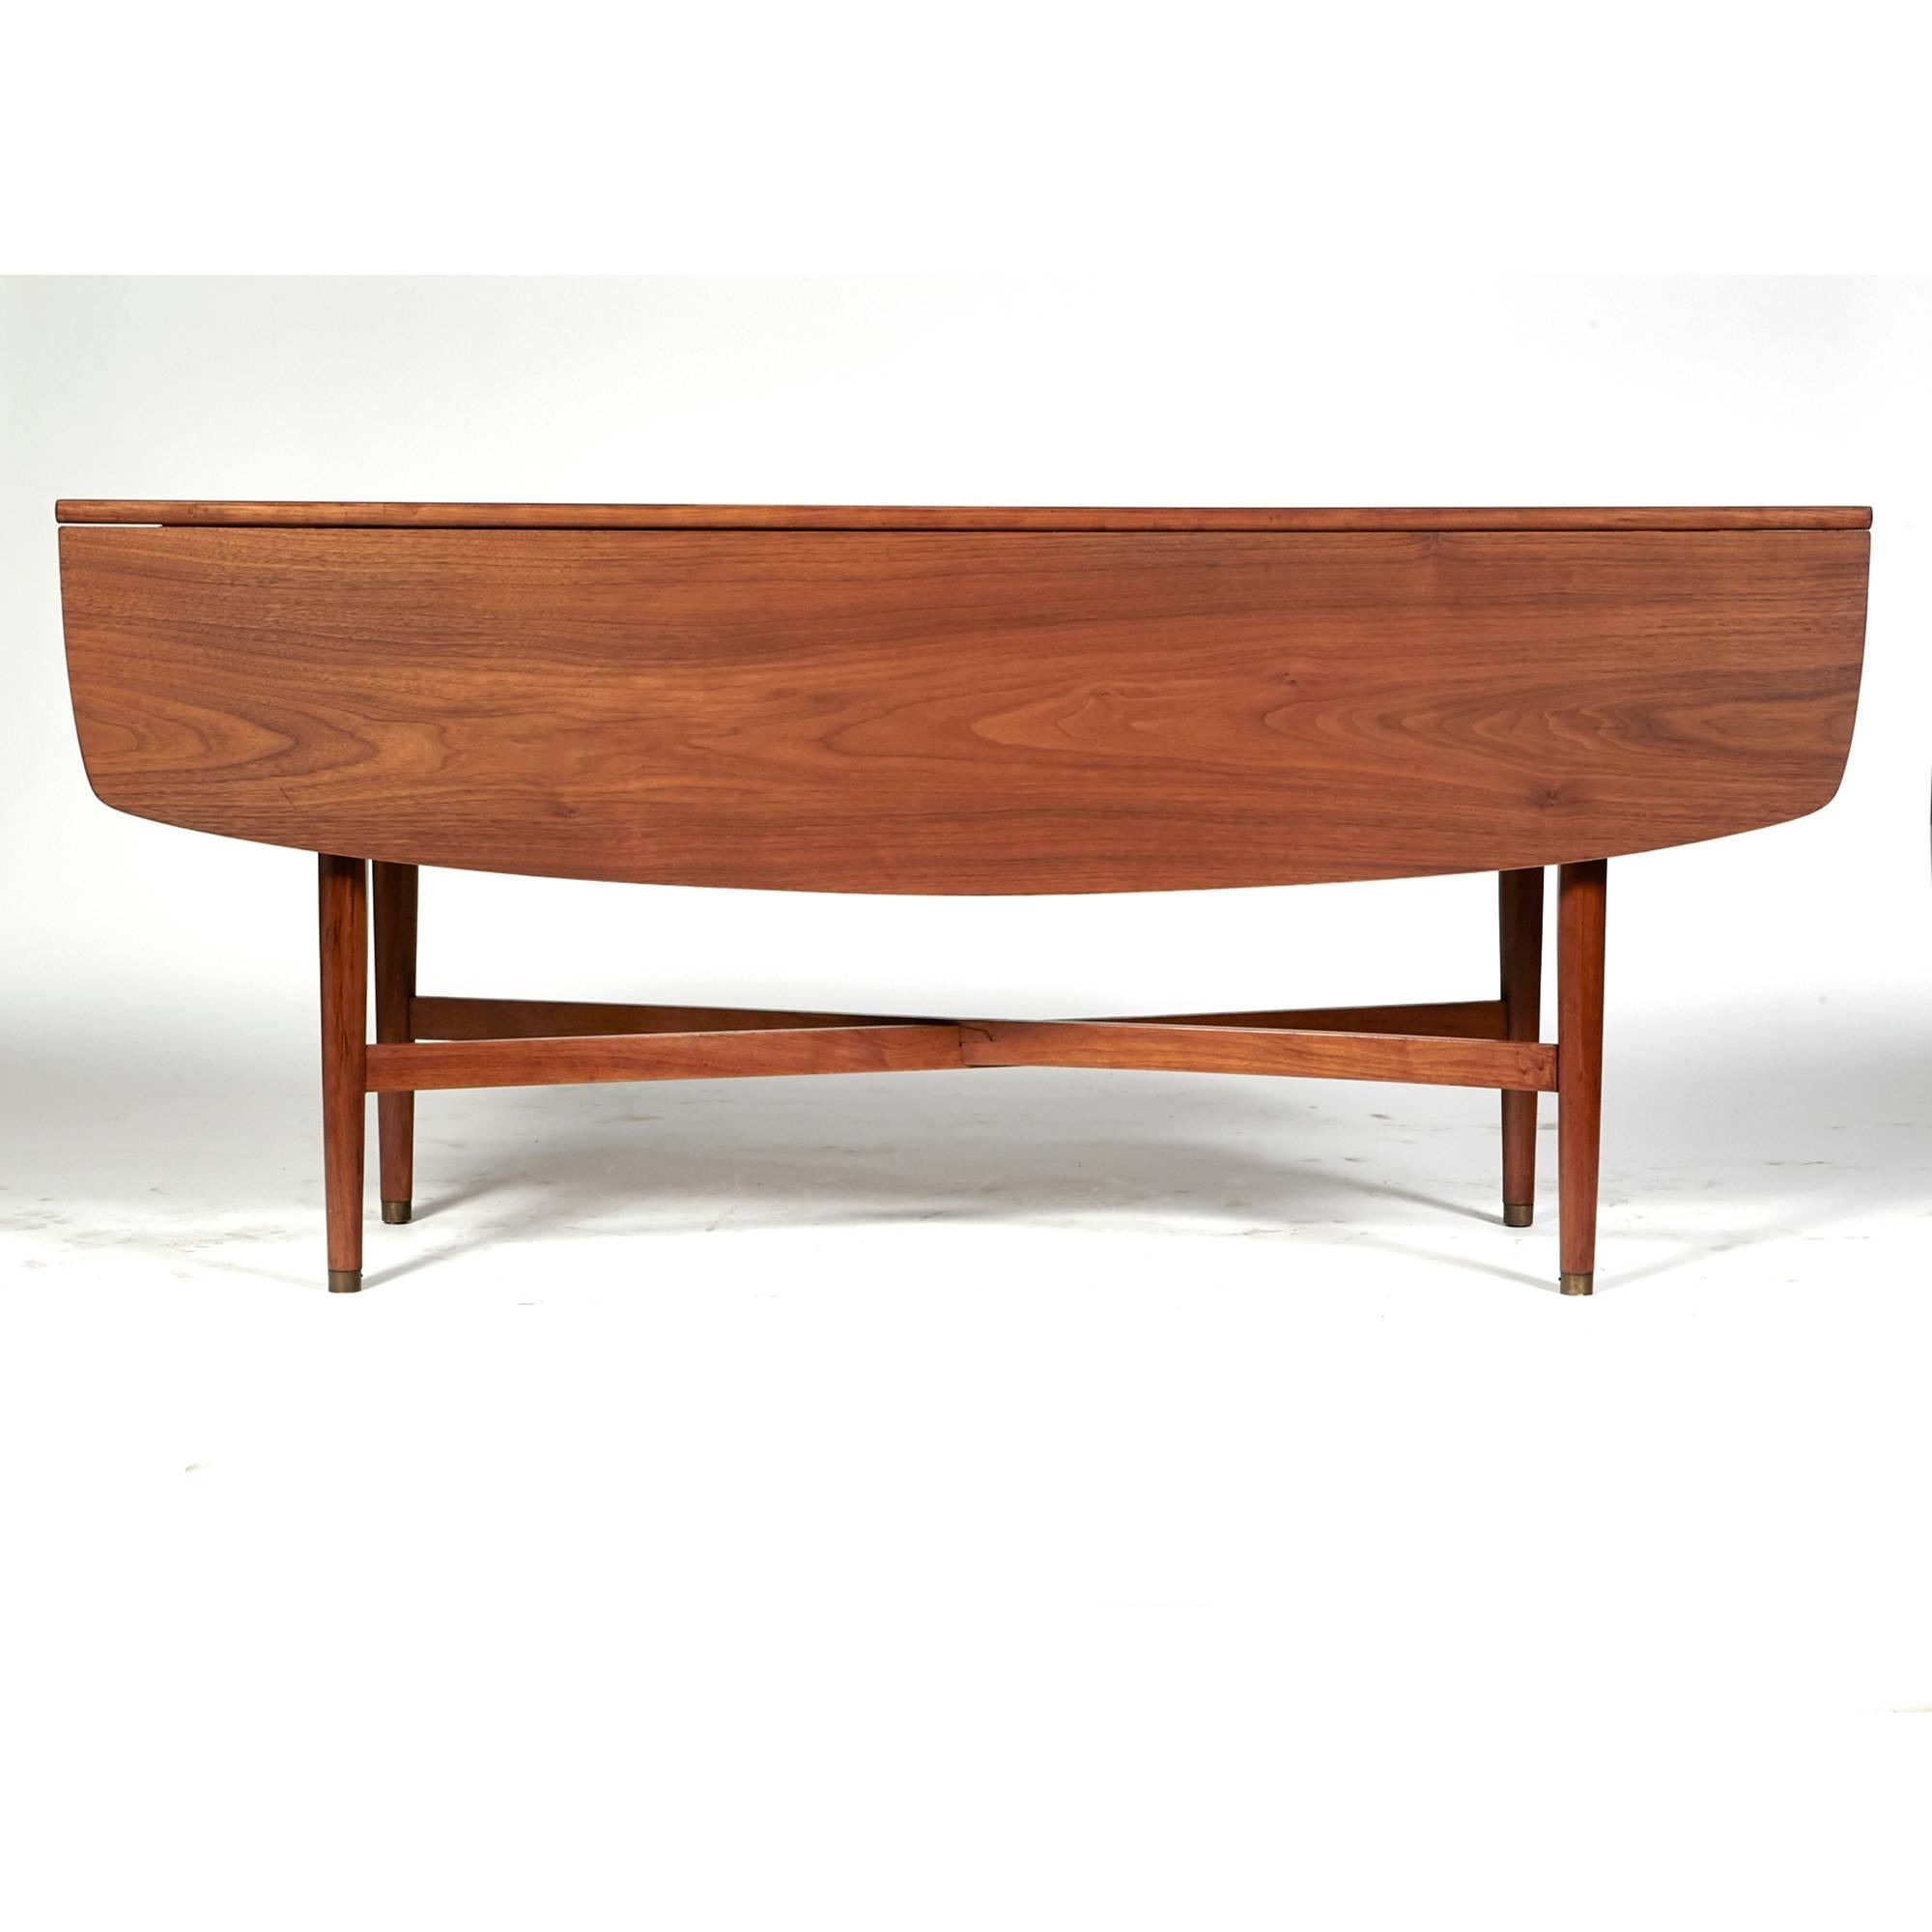 Vintage Drexel declaration Model 851-311 walnut drop-leaf X-stretcher base sofa table designed by Kipp Stewart and Stewart MacDougall, dated 1964. Refinished condition. Open, 42